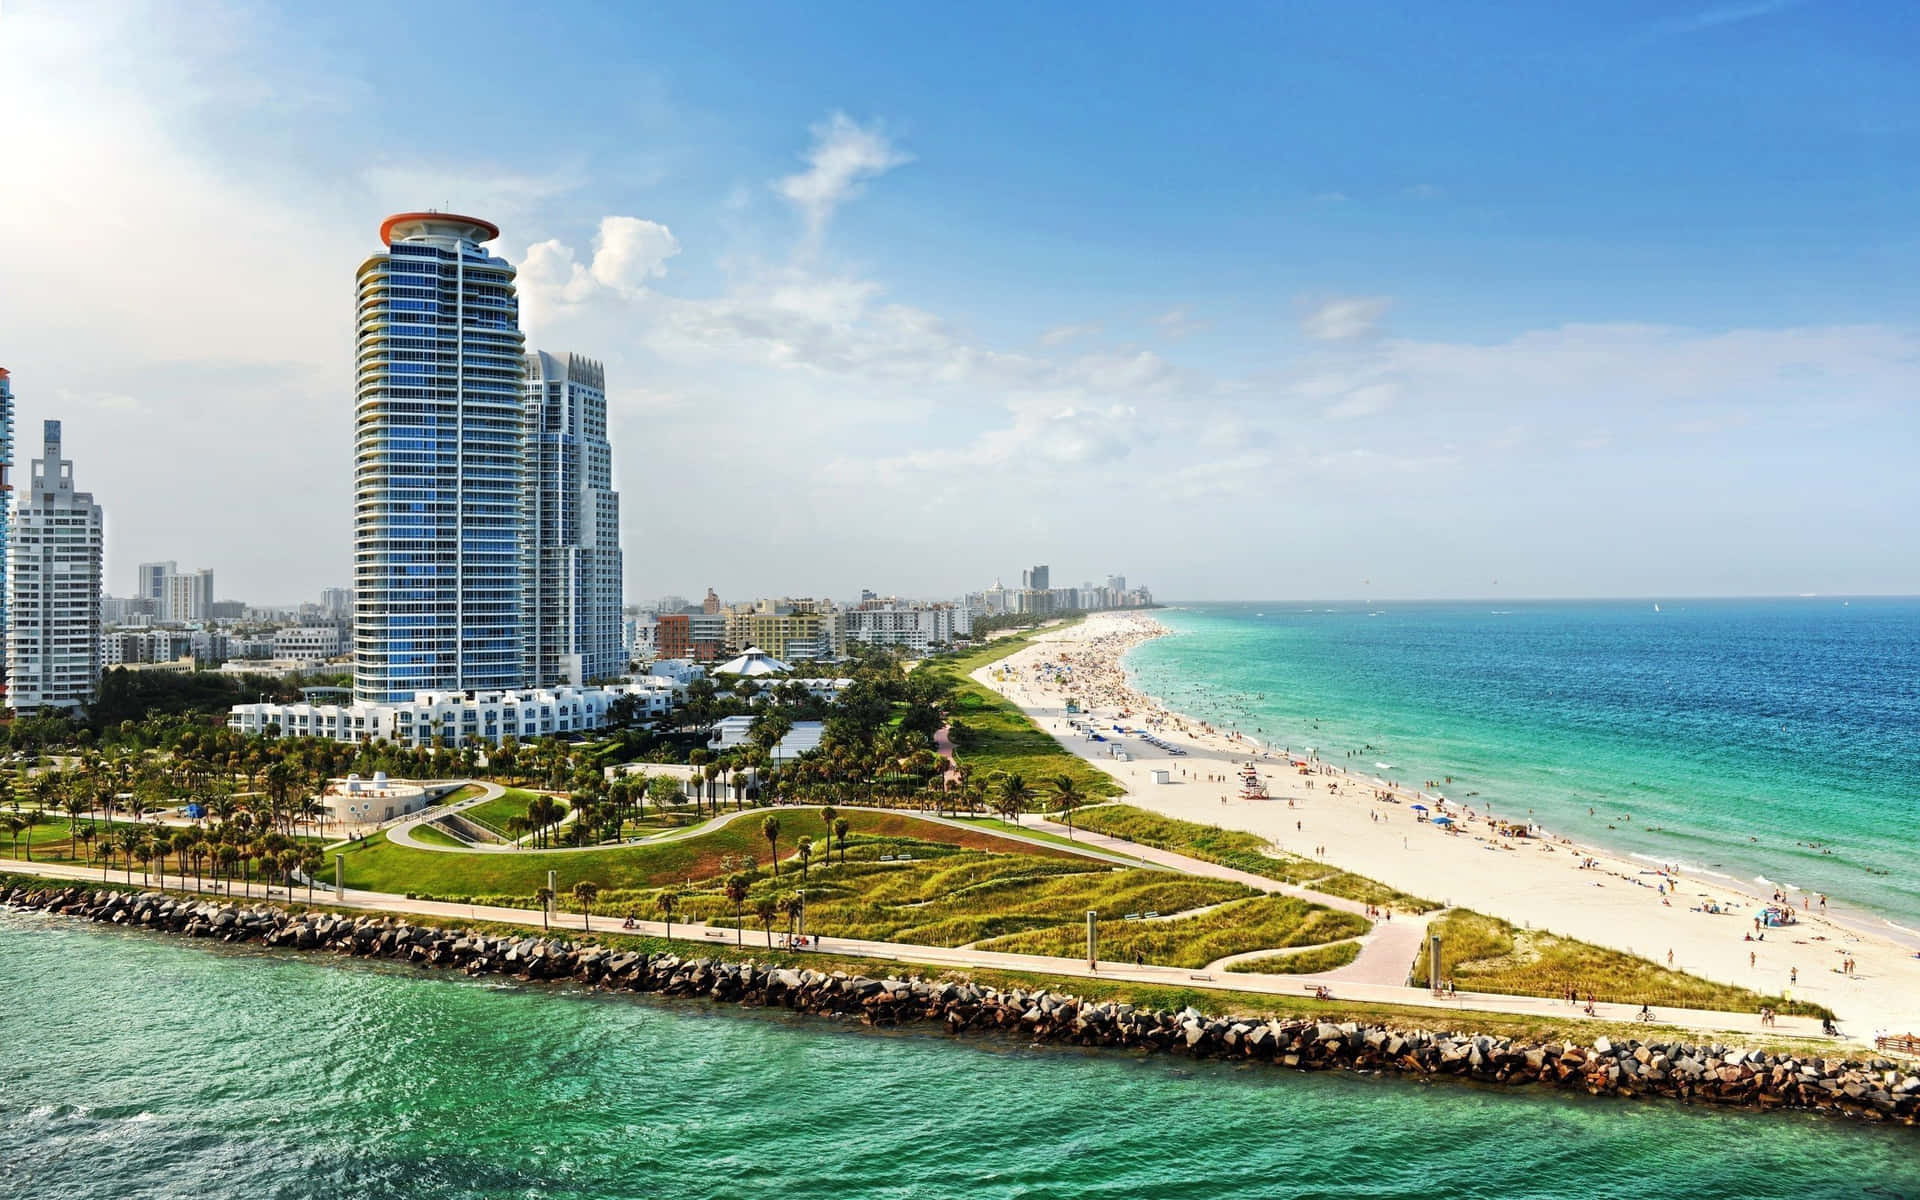 Miami Beach Park Aerial View Picture